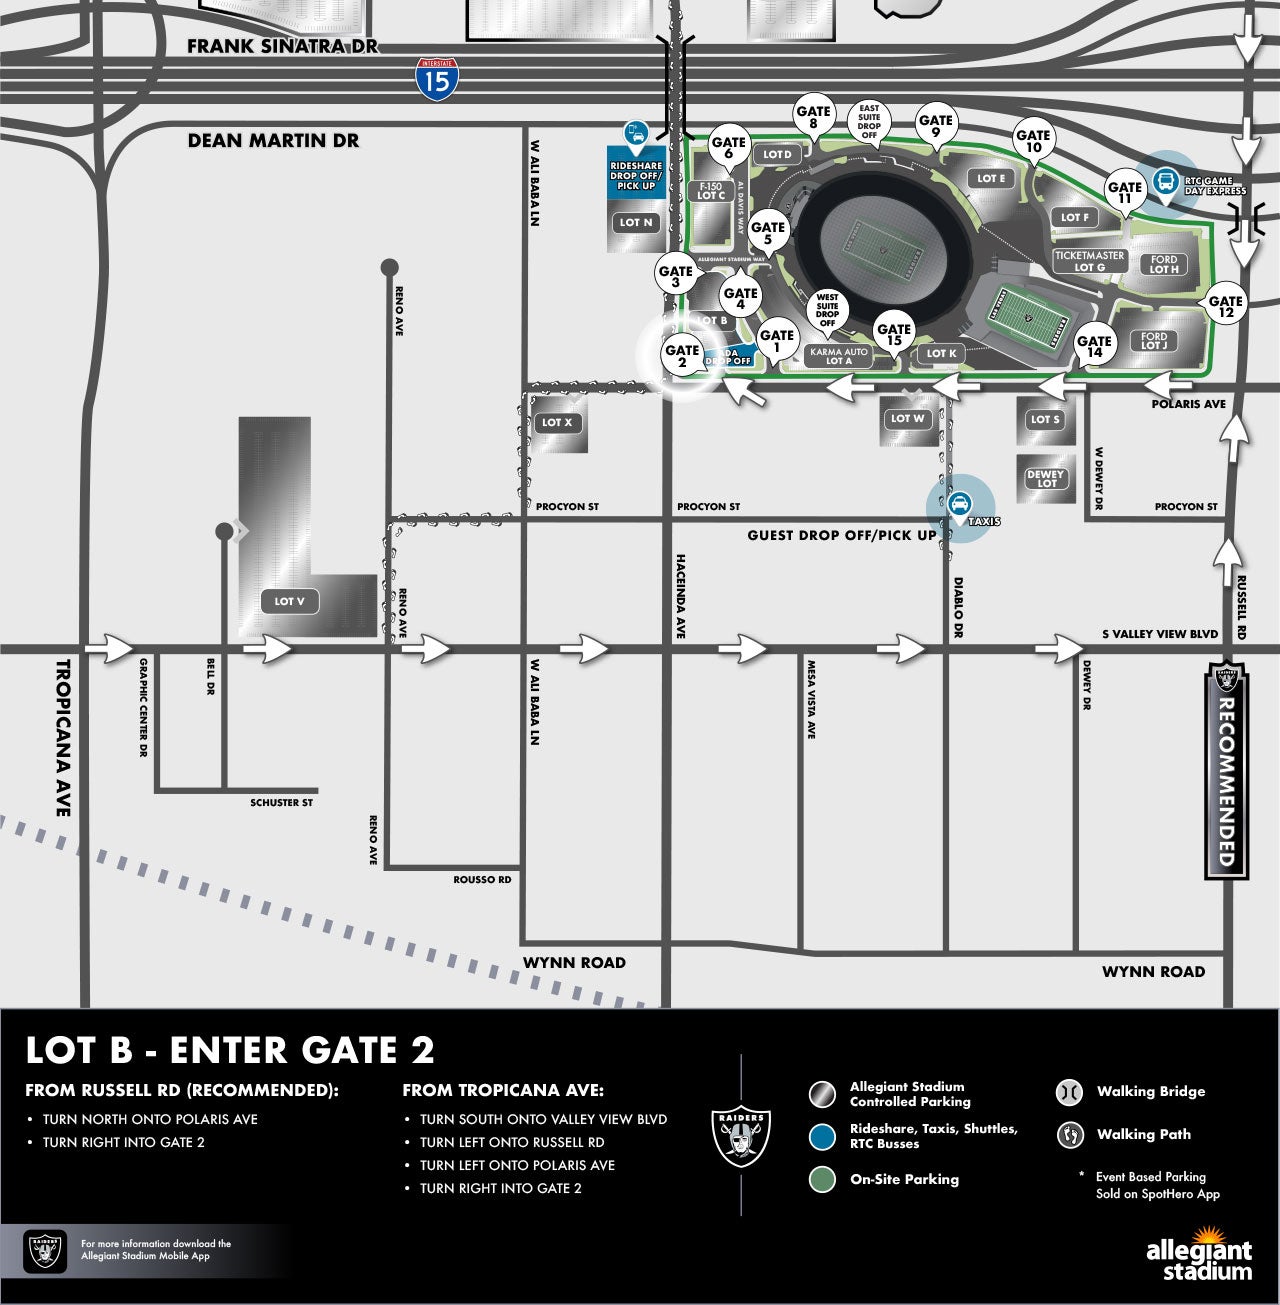 Lot B Parking Map - Enter Gate 2